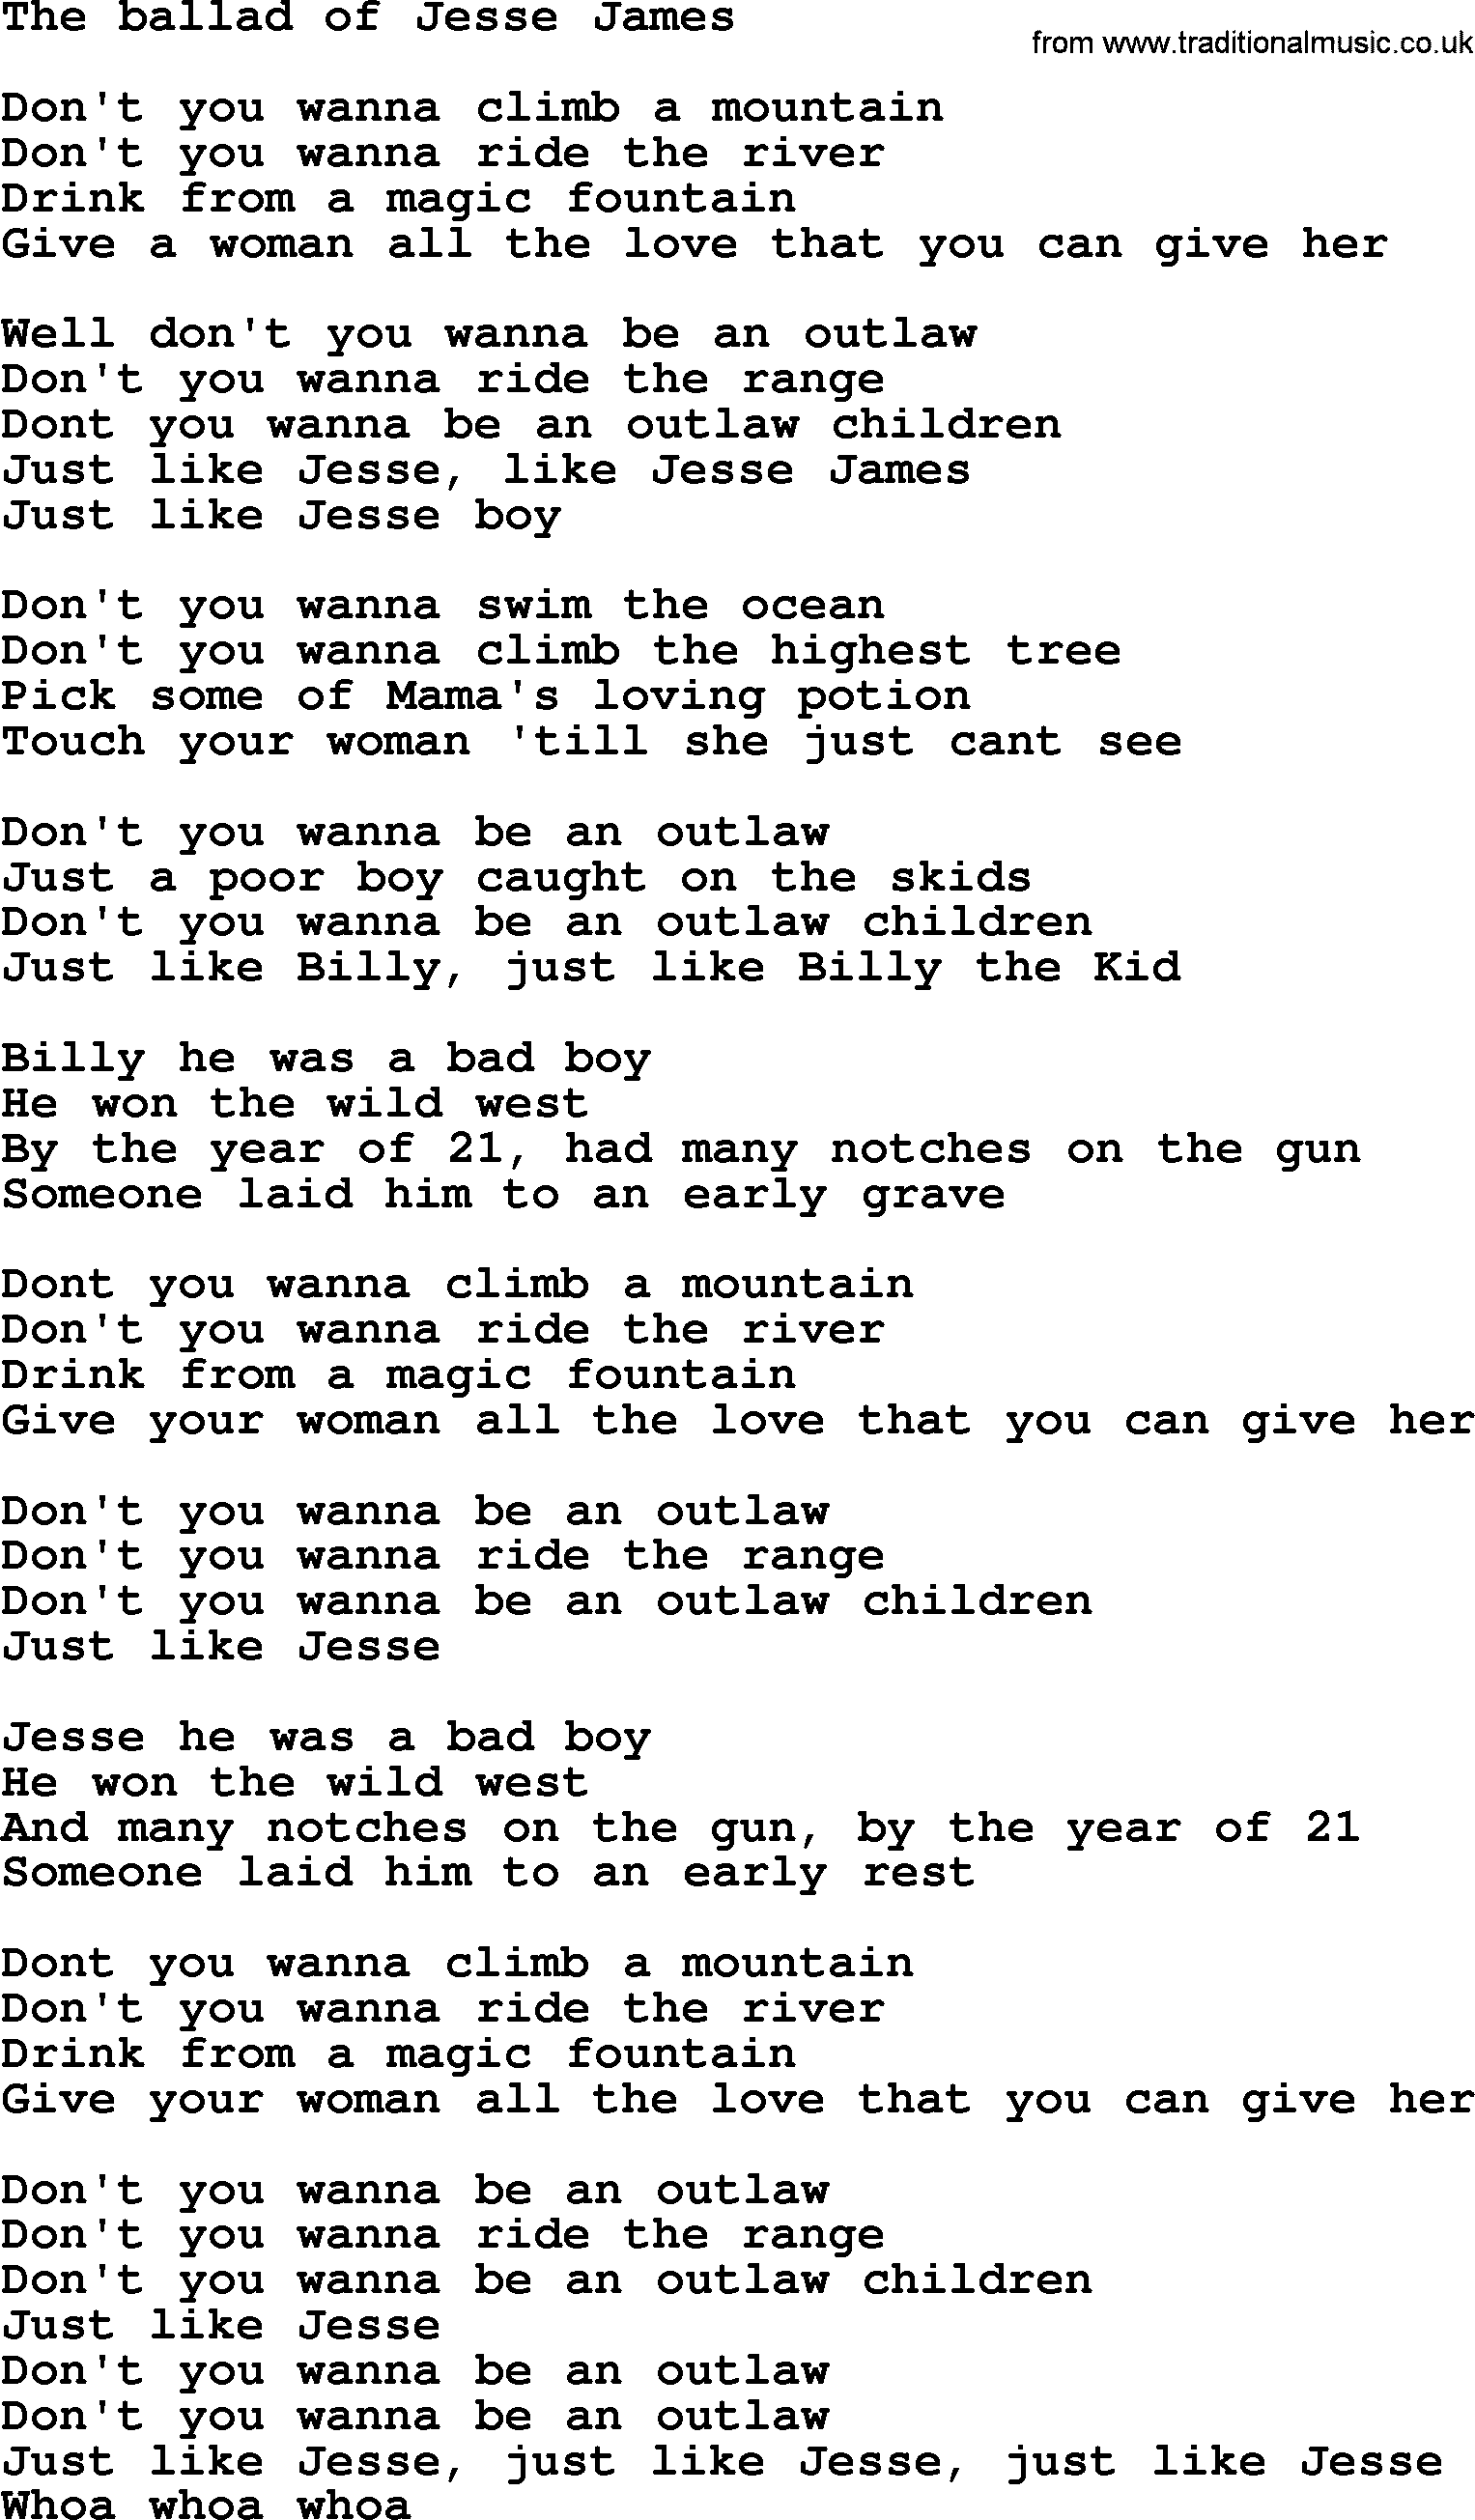 Bruce Springsteen song: The Ballad Of Jesse James lyrics